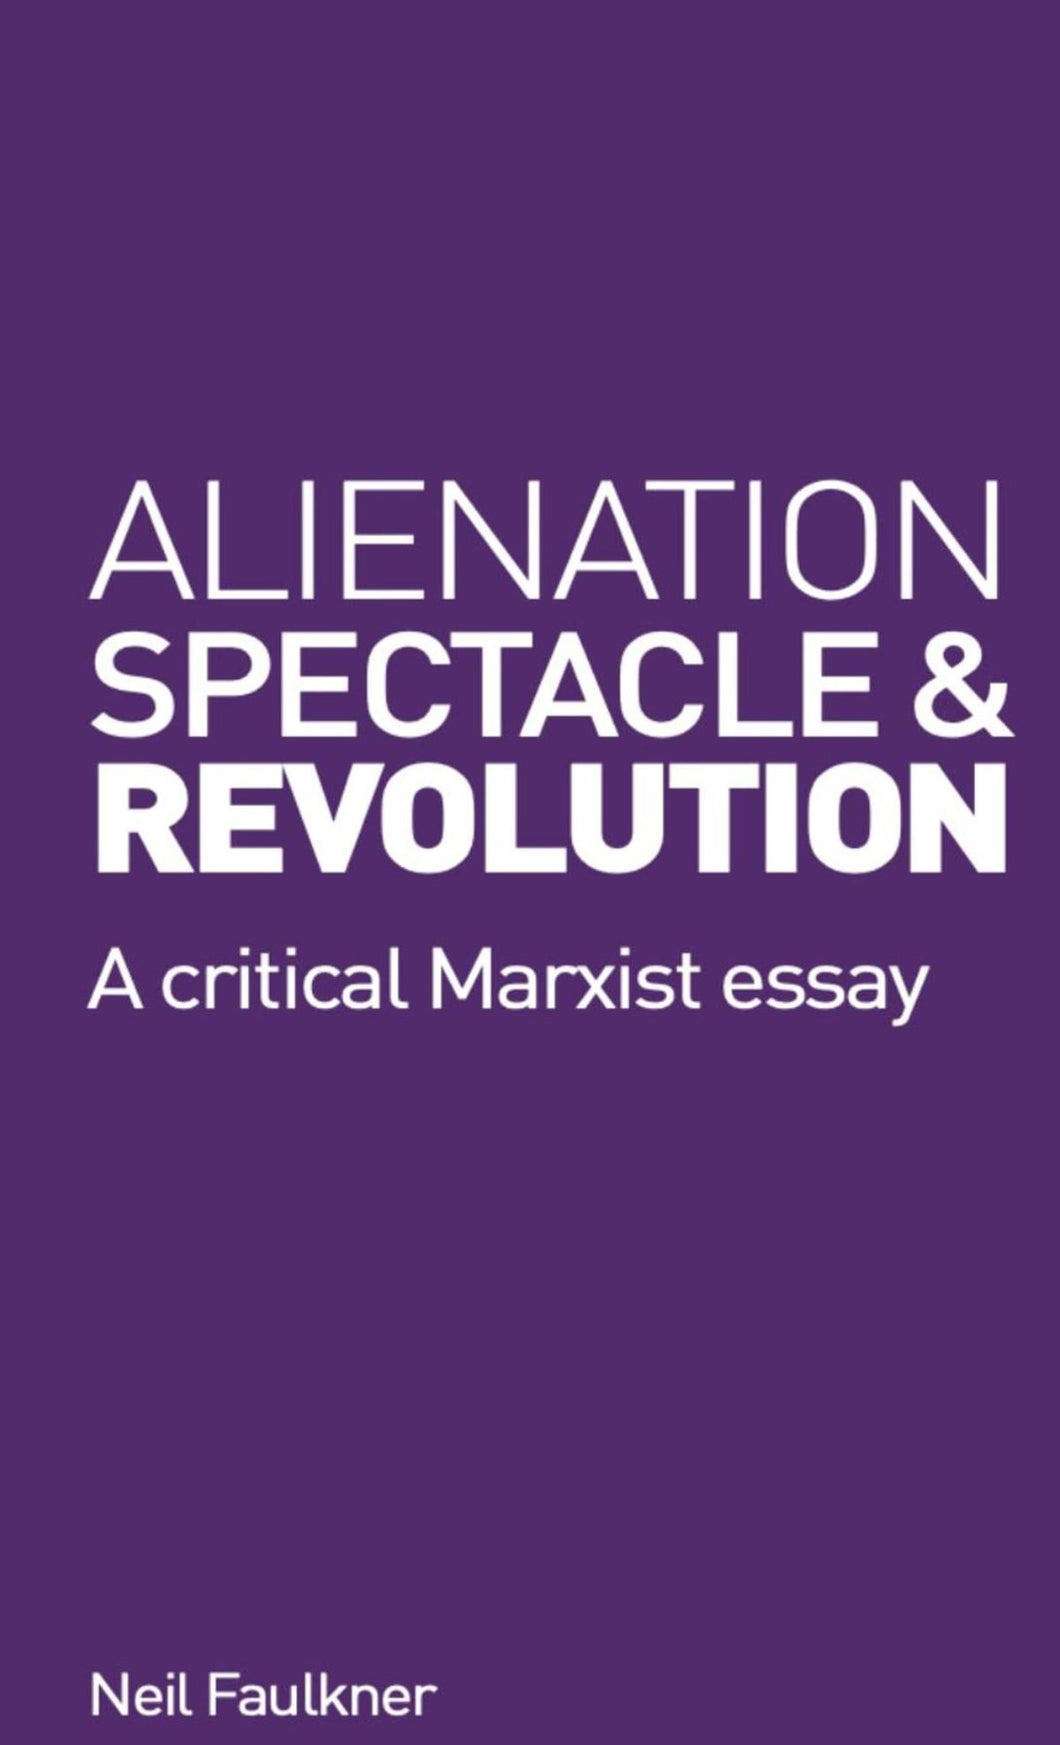 Alienation Spectacle & Revolution